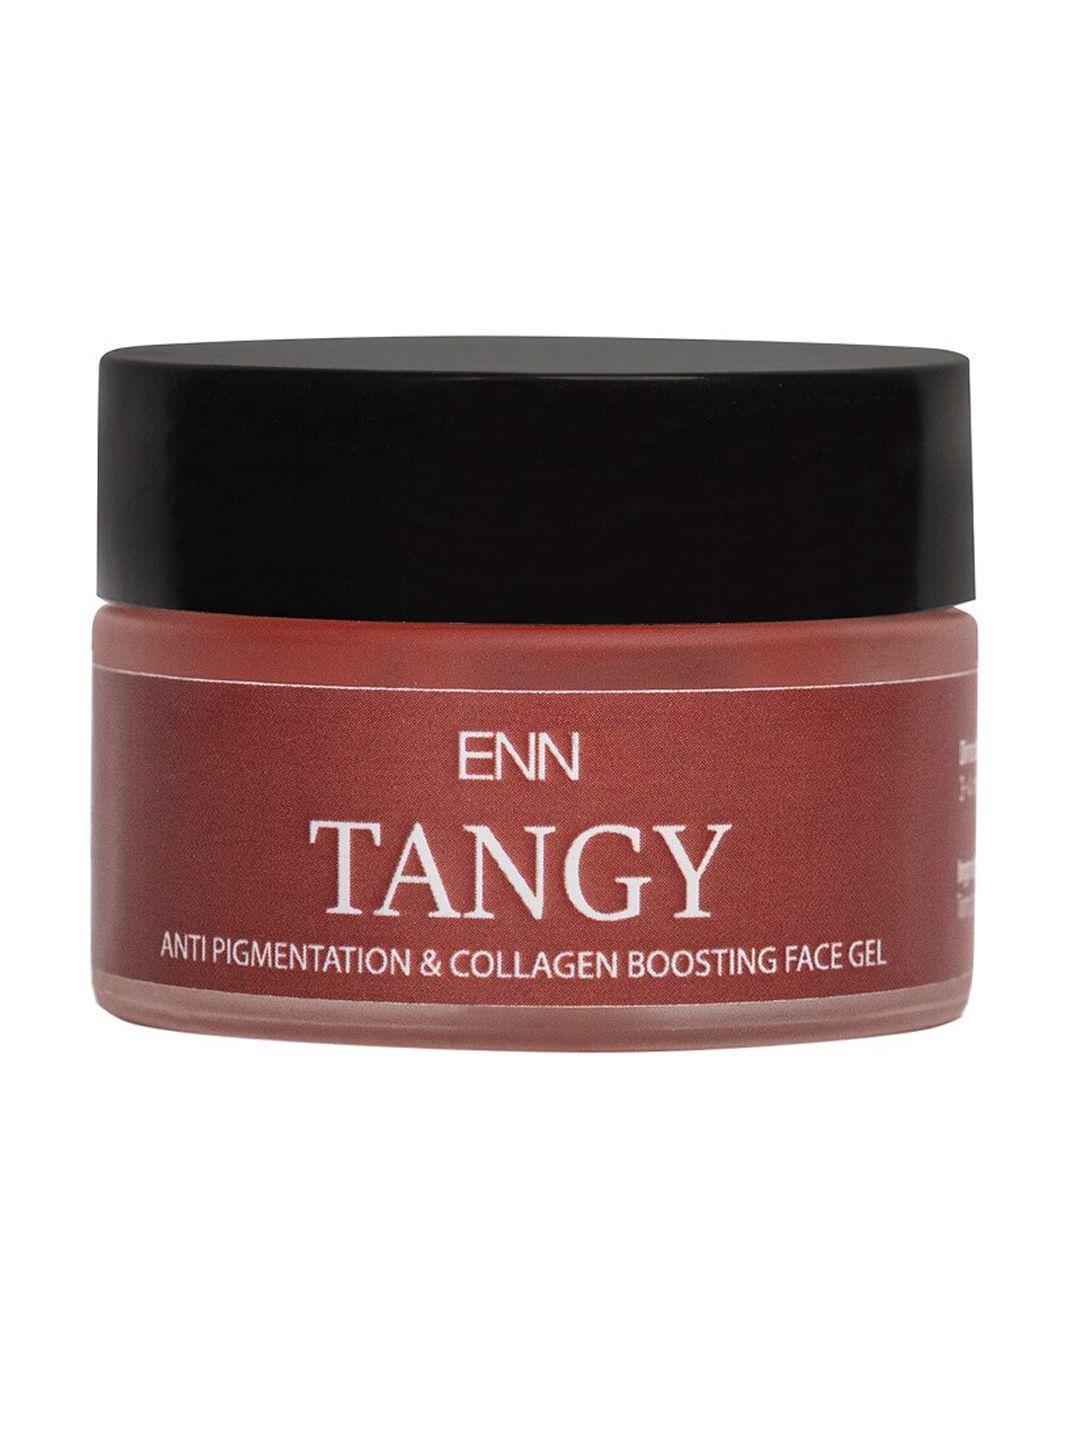 enn tangy anti pigmentation & collagen boosting face gel - 15 g